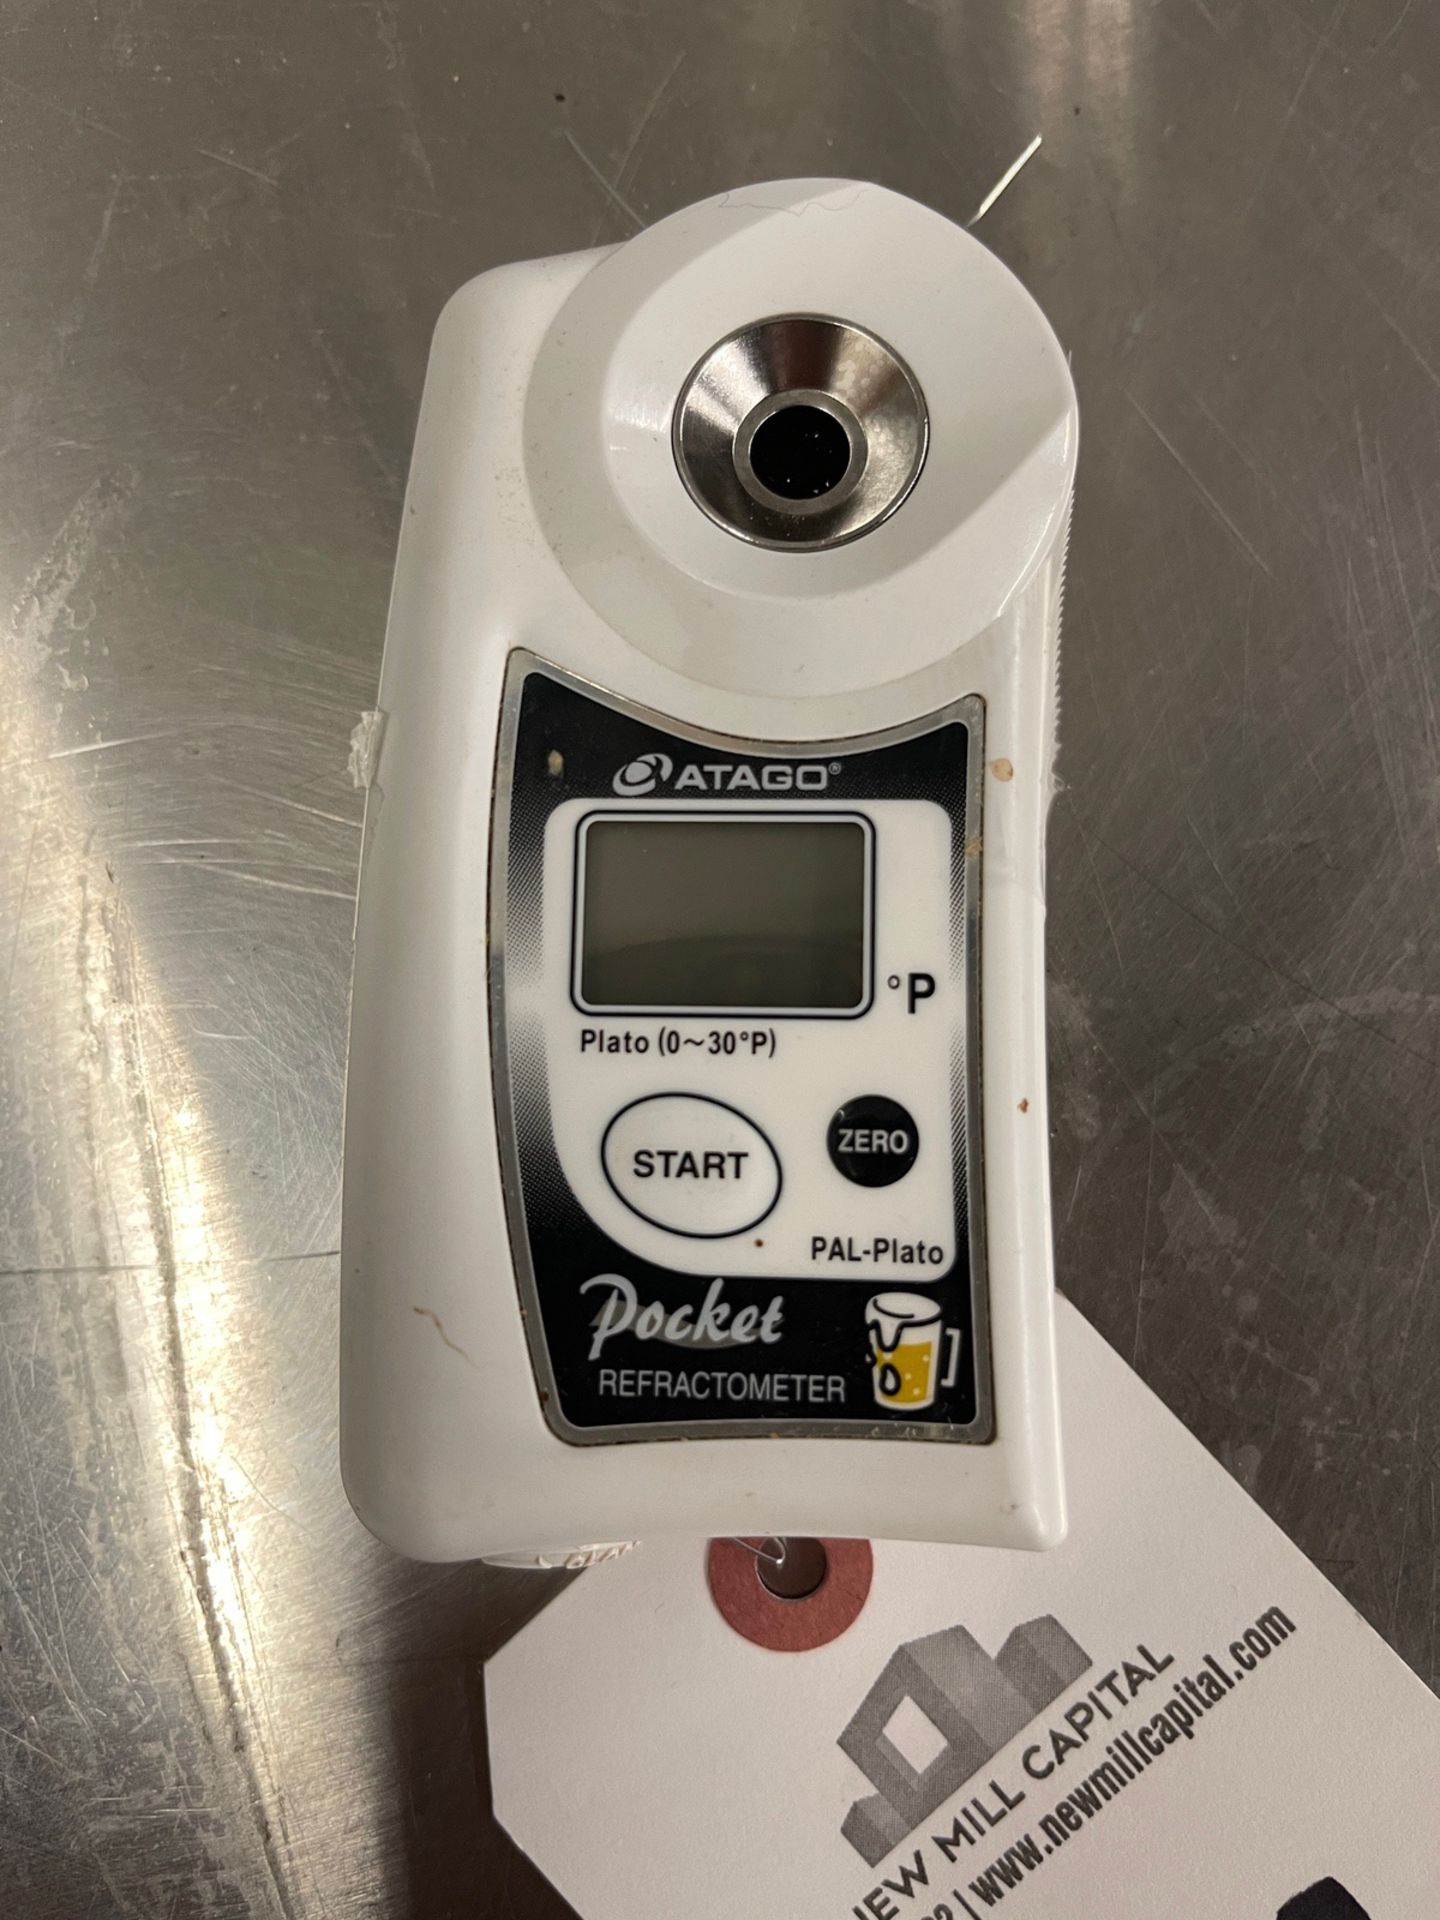 Atago Pocket Refractometer | Rig Fee $10